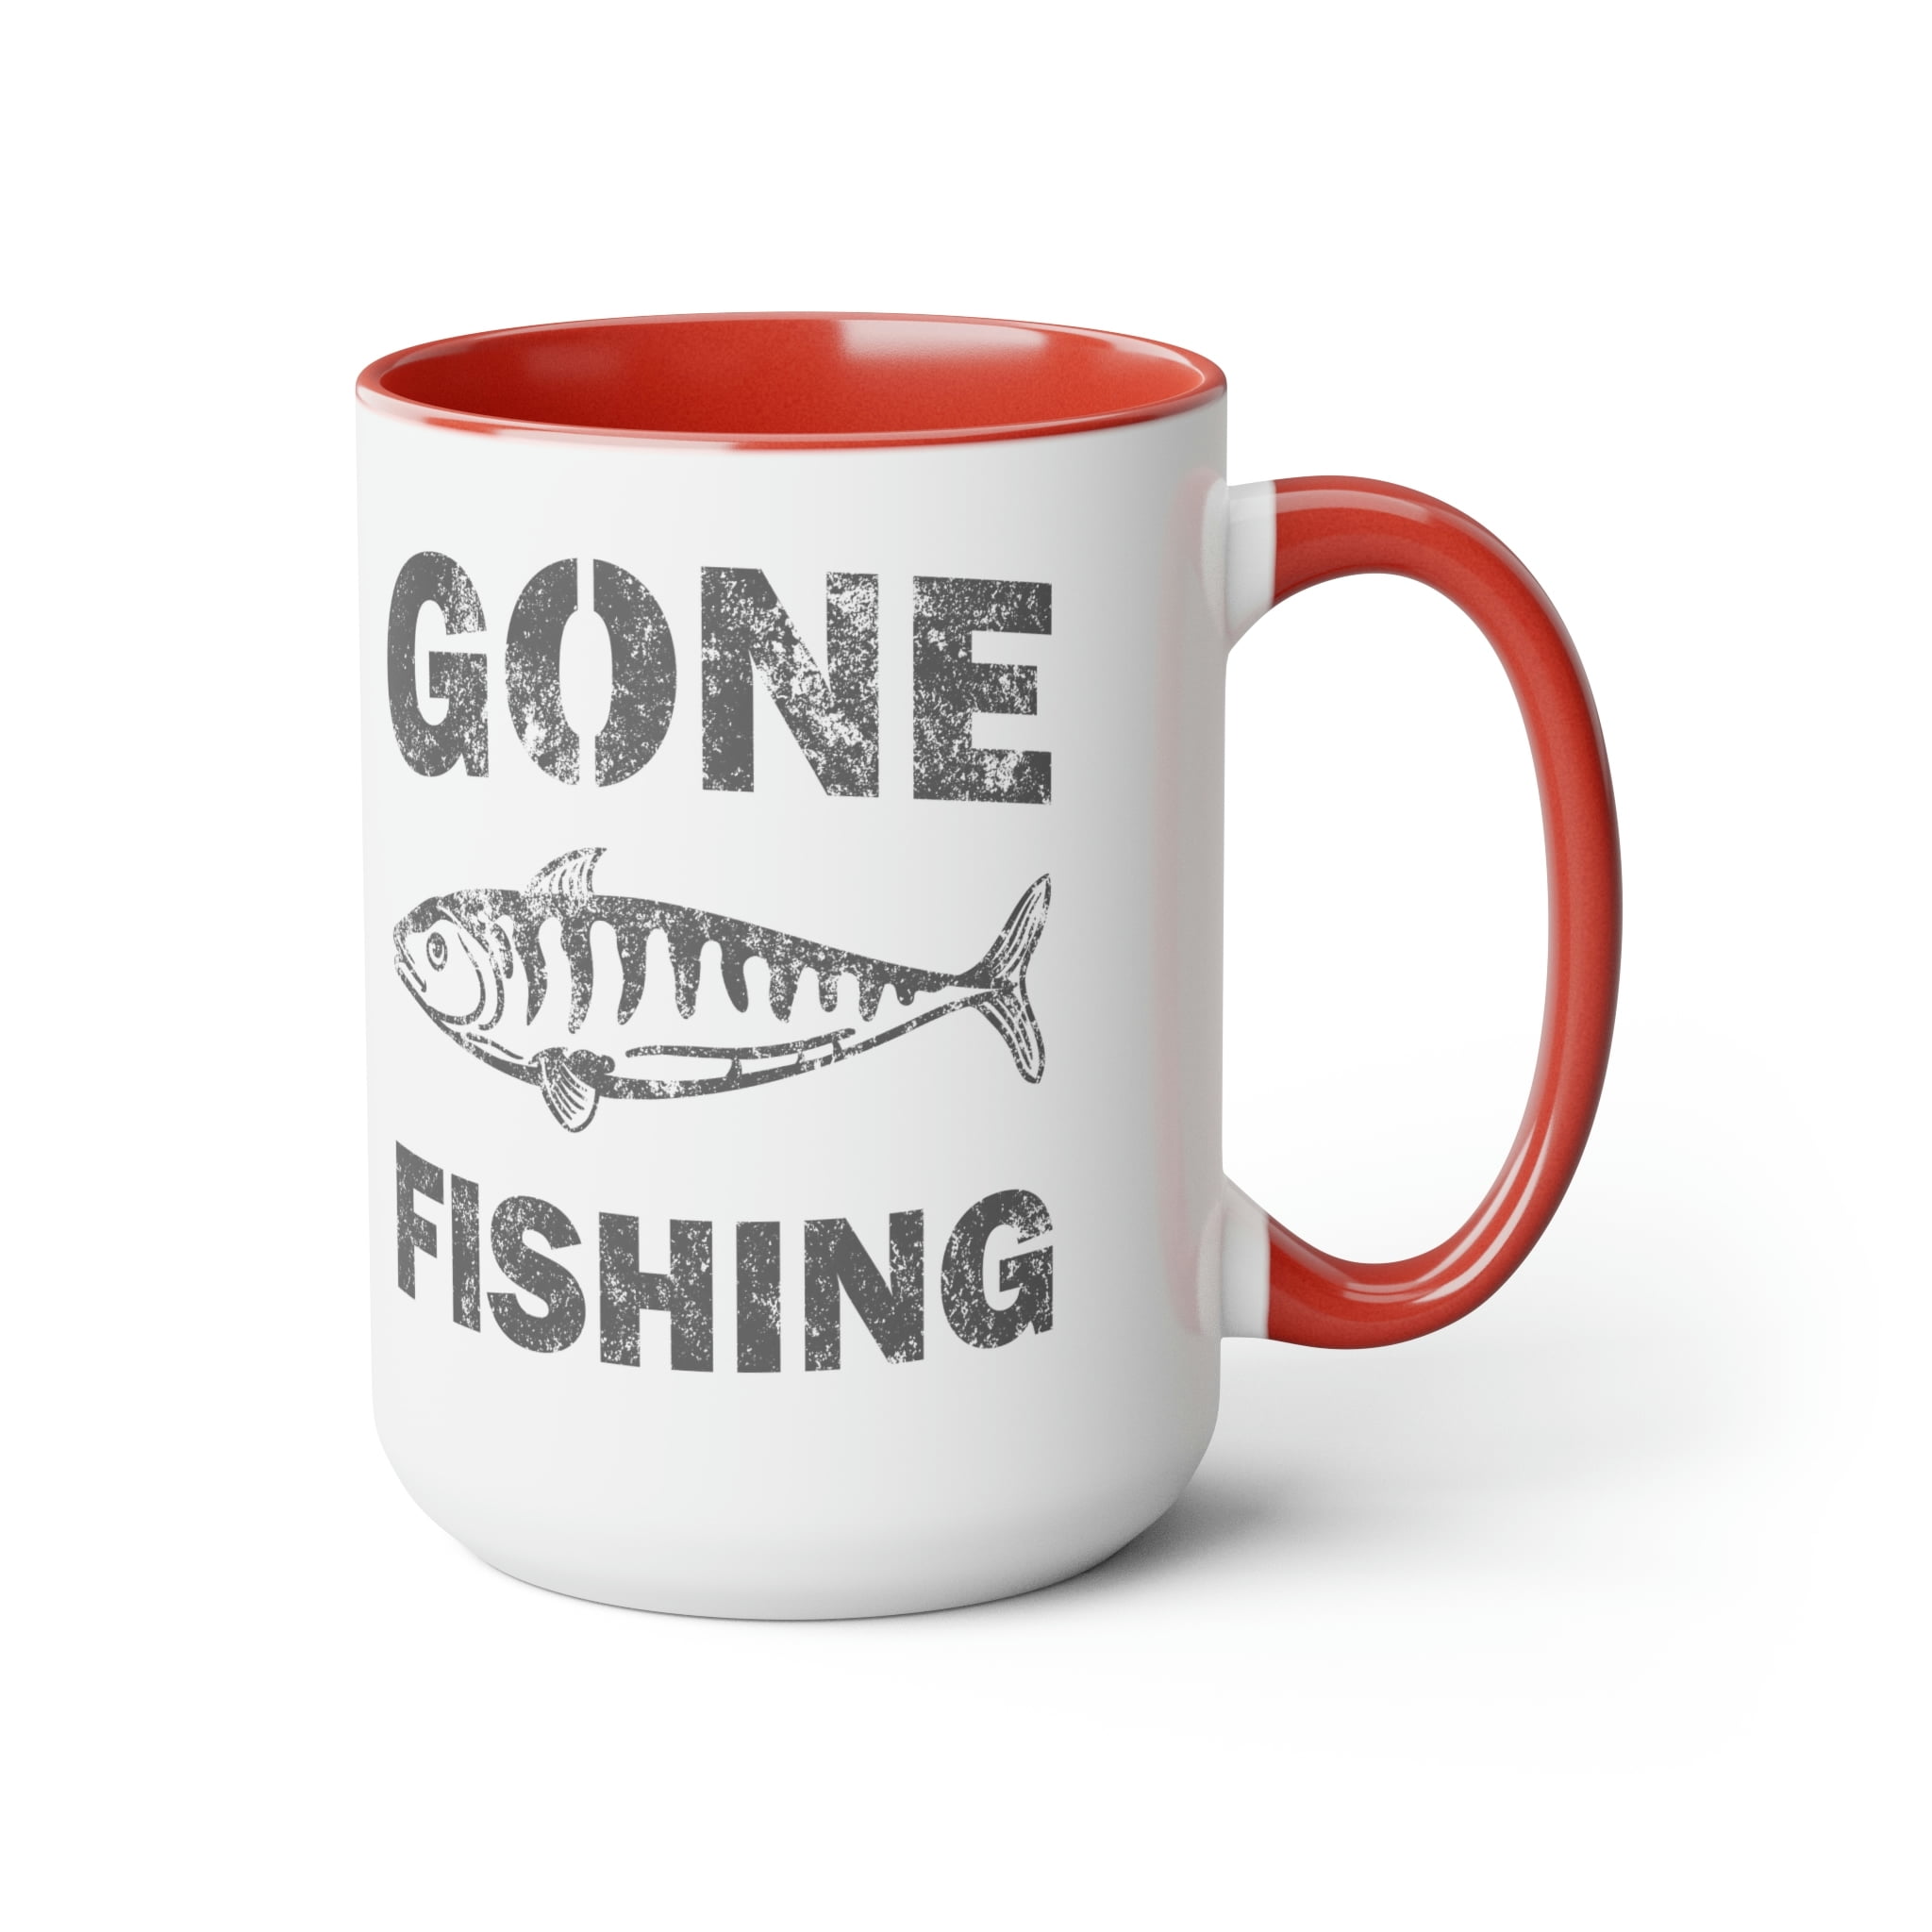 Fish to live fishing mug archives - Mugman